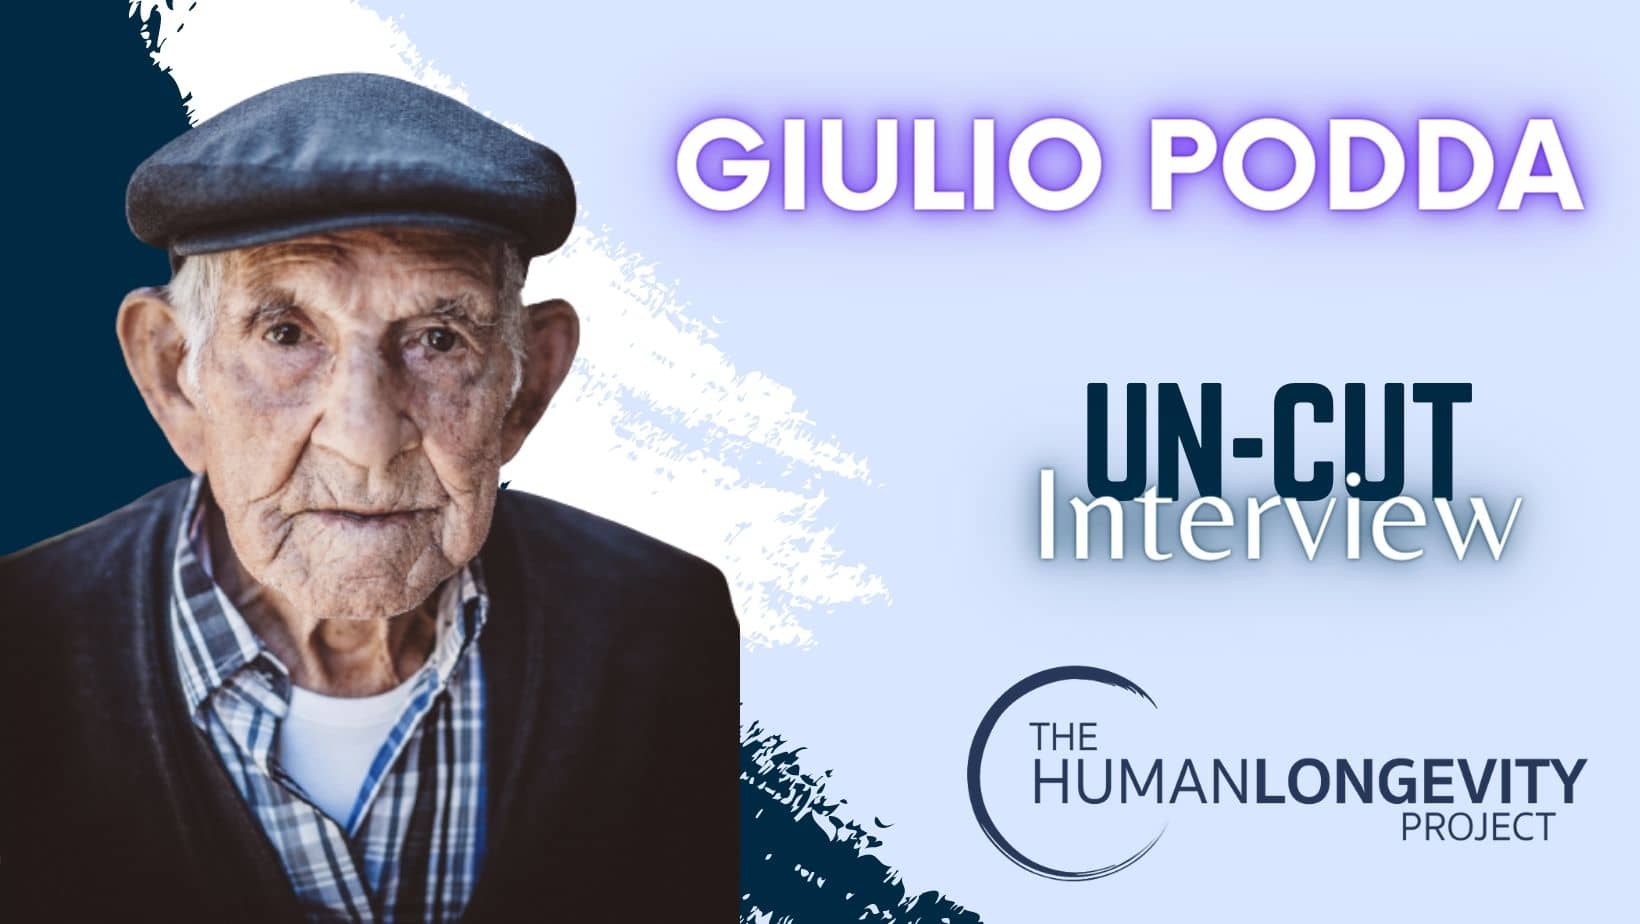 Human Longevity Project Uncut Interview With Giulio Podda